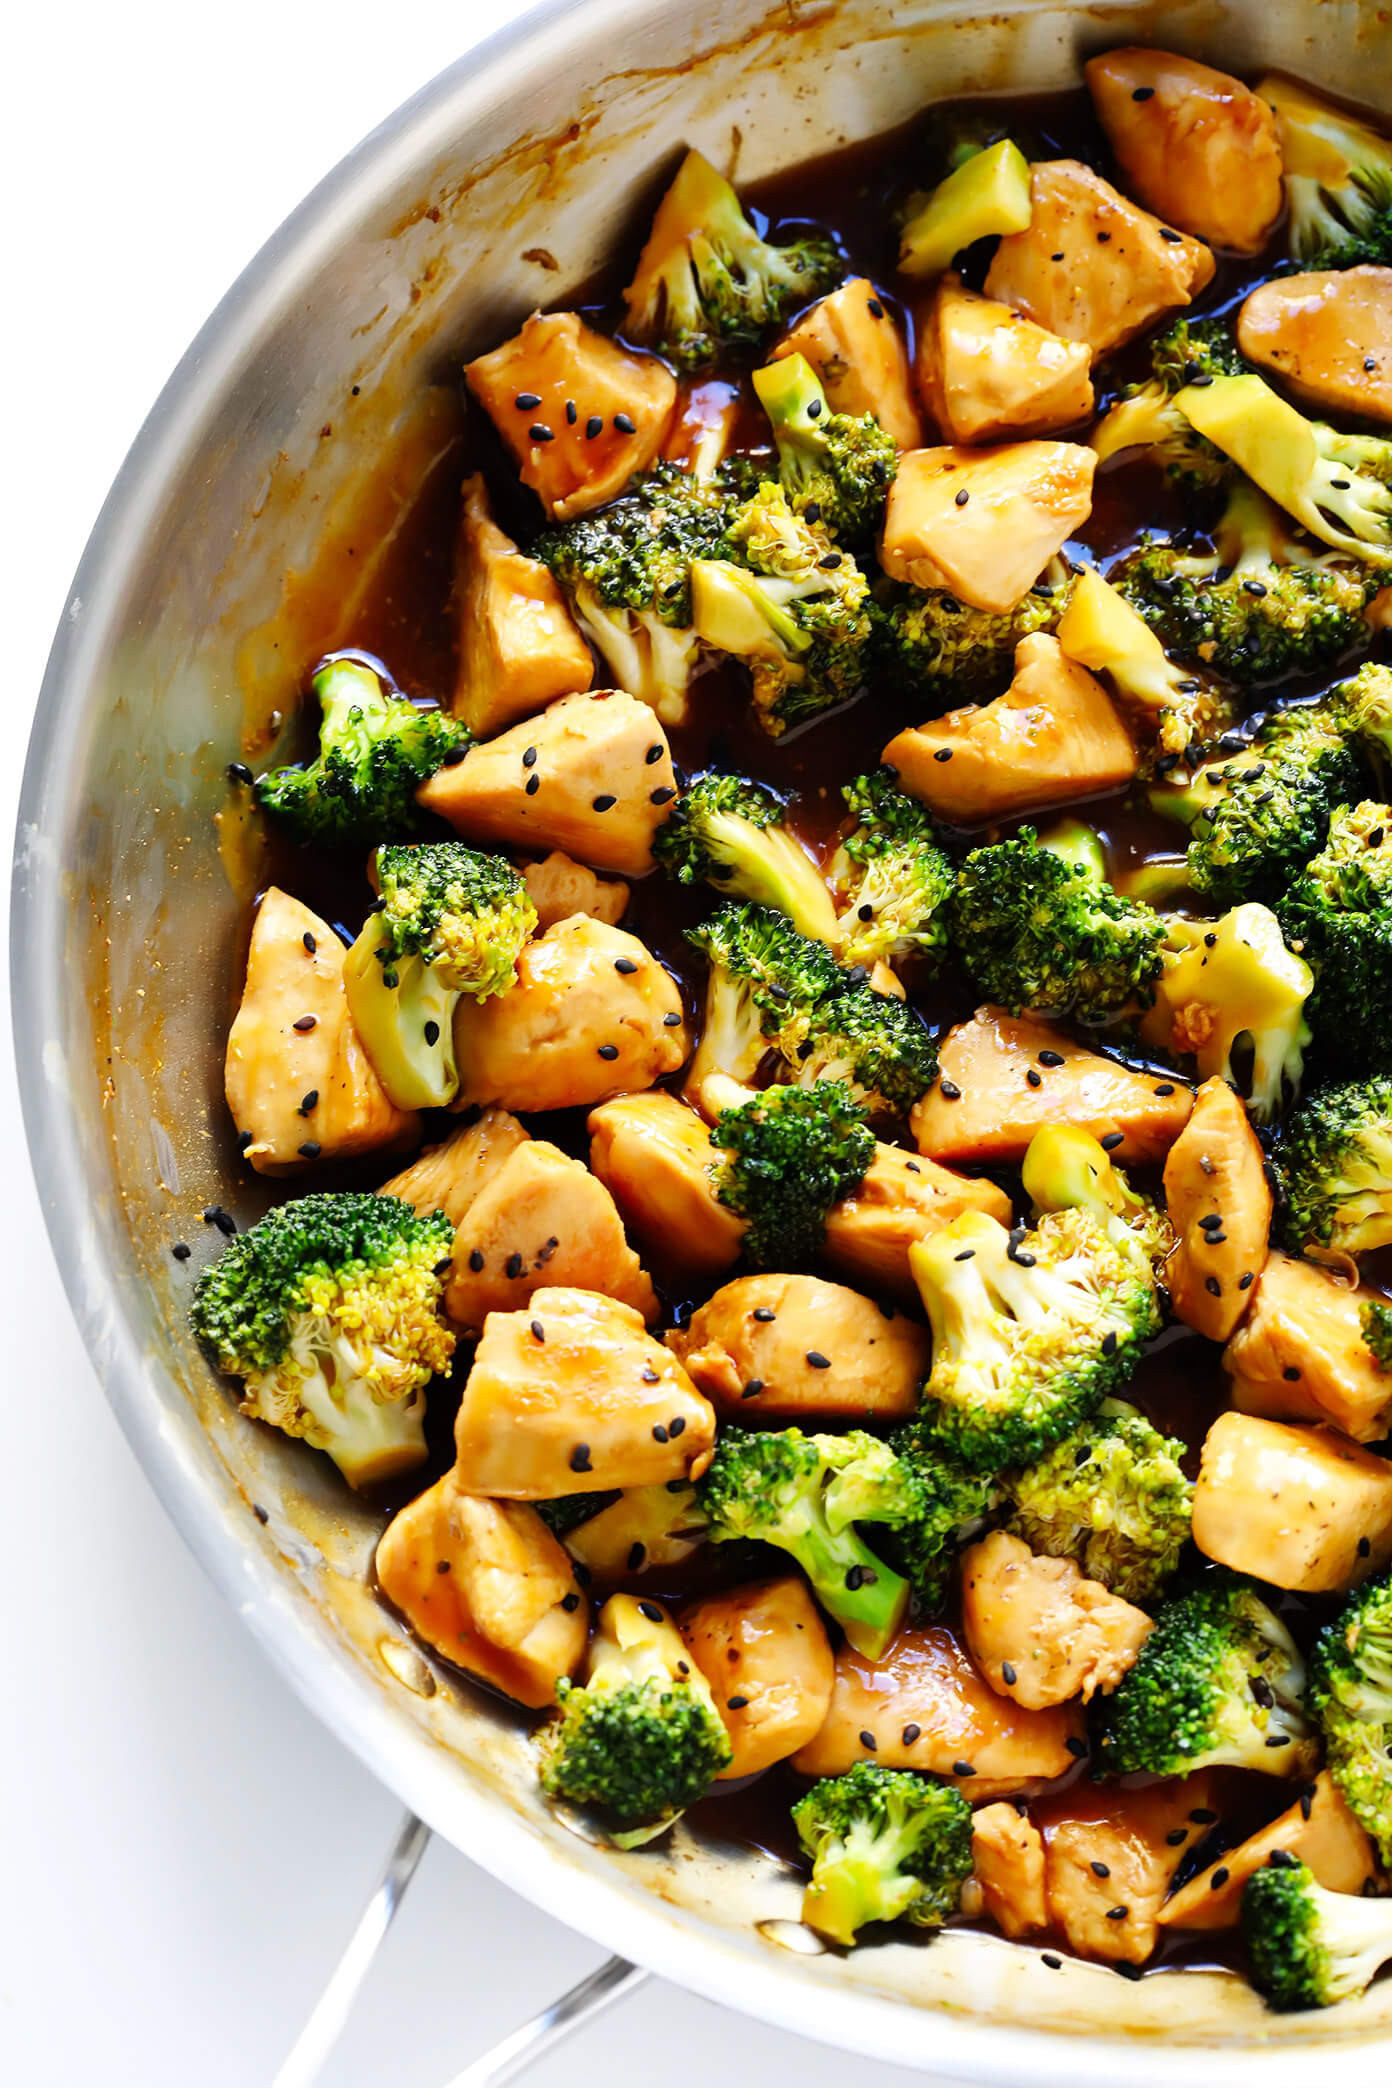 Healthy Chicken And Broccoli Recipes
 12 Minute Chicken and Broccoli